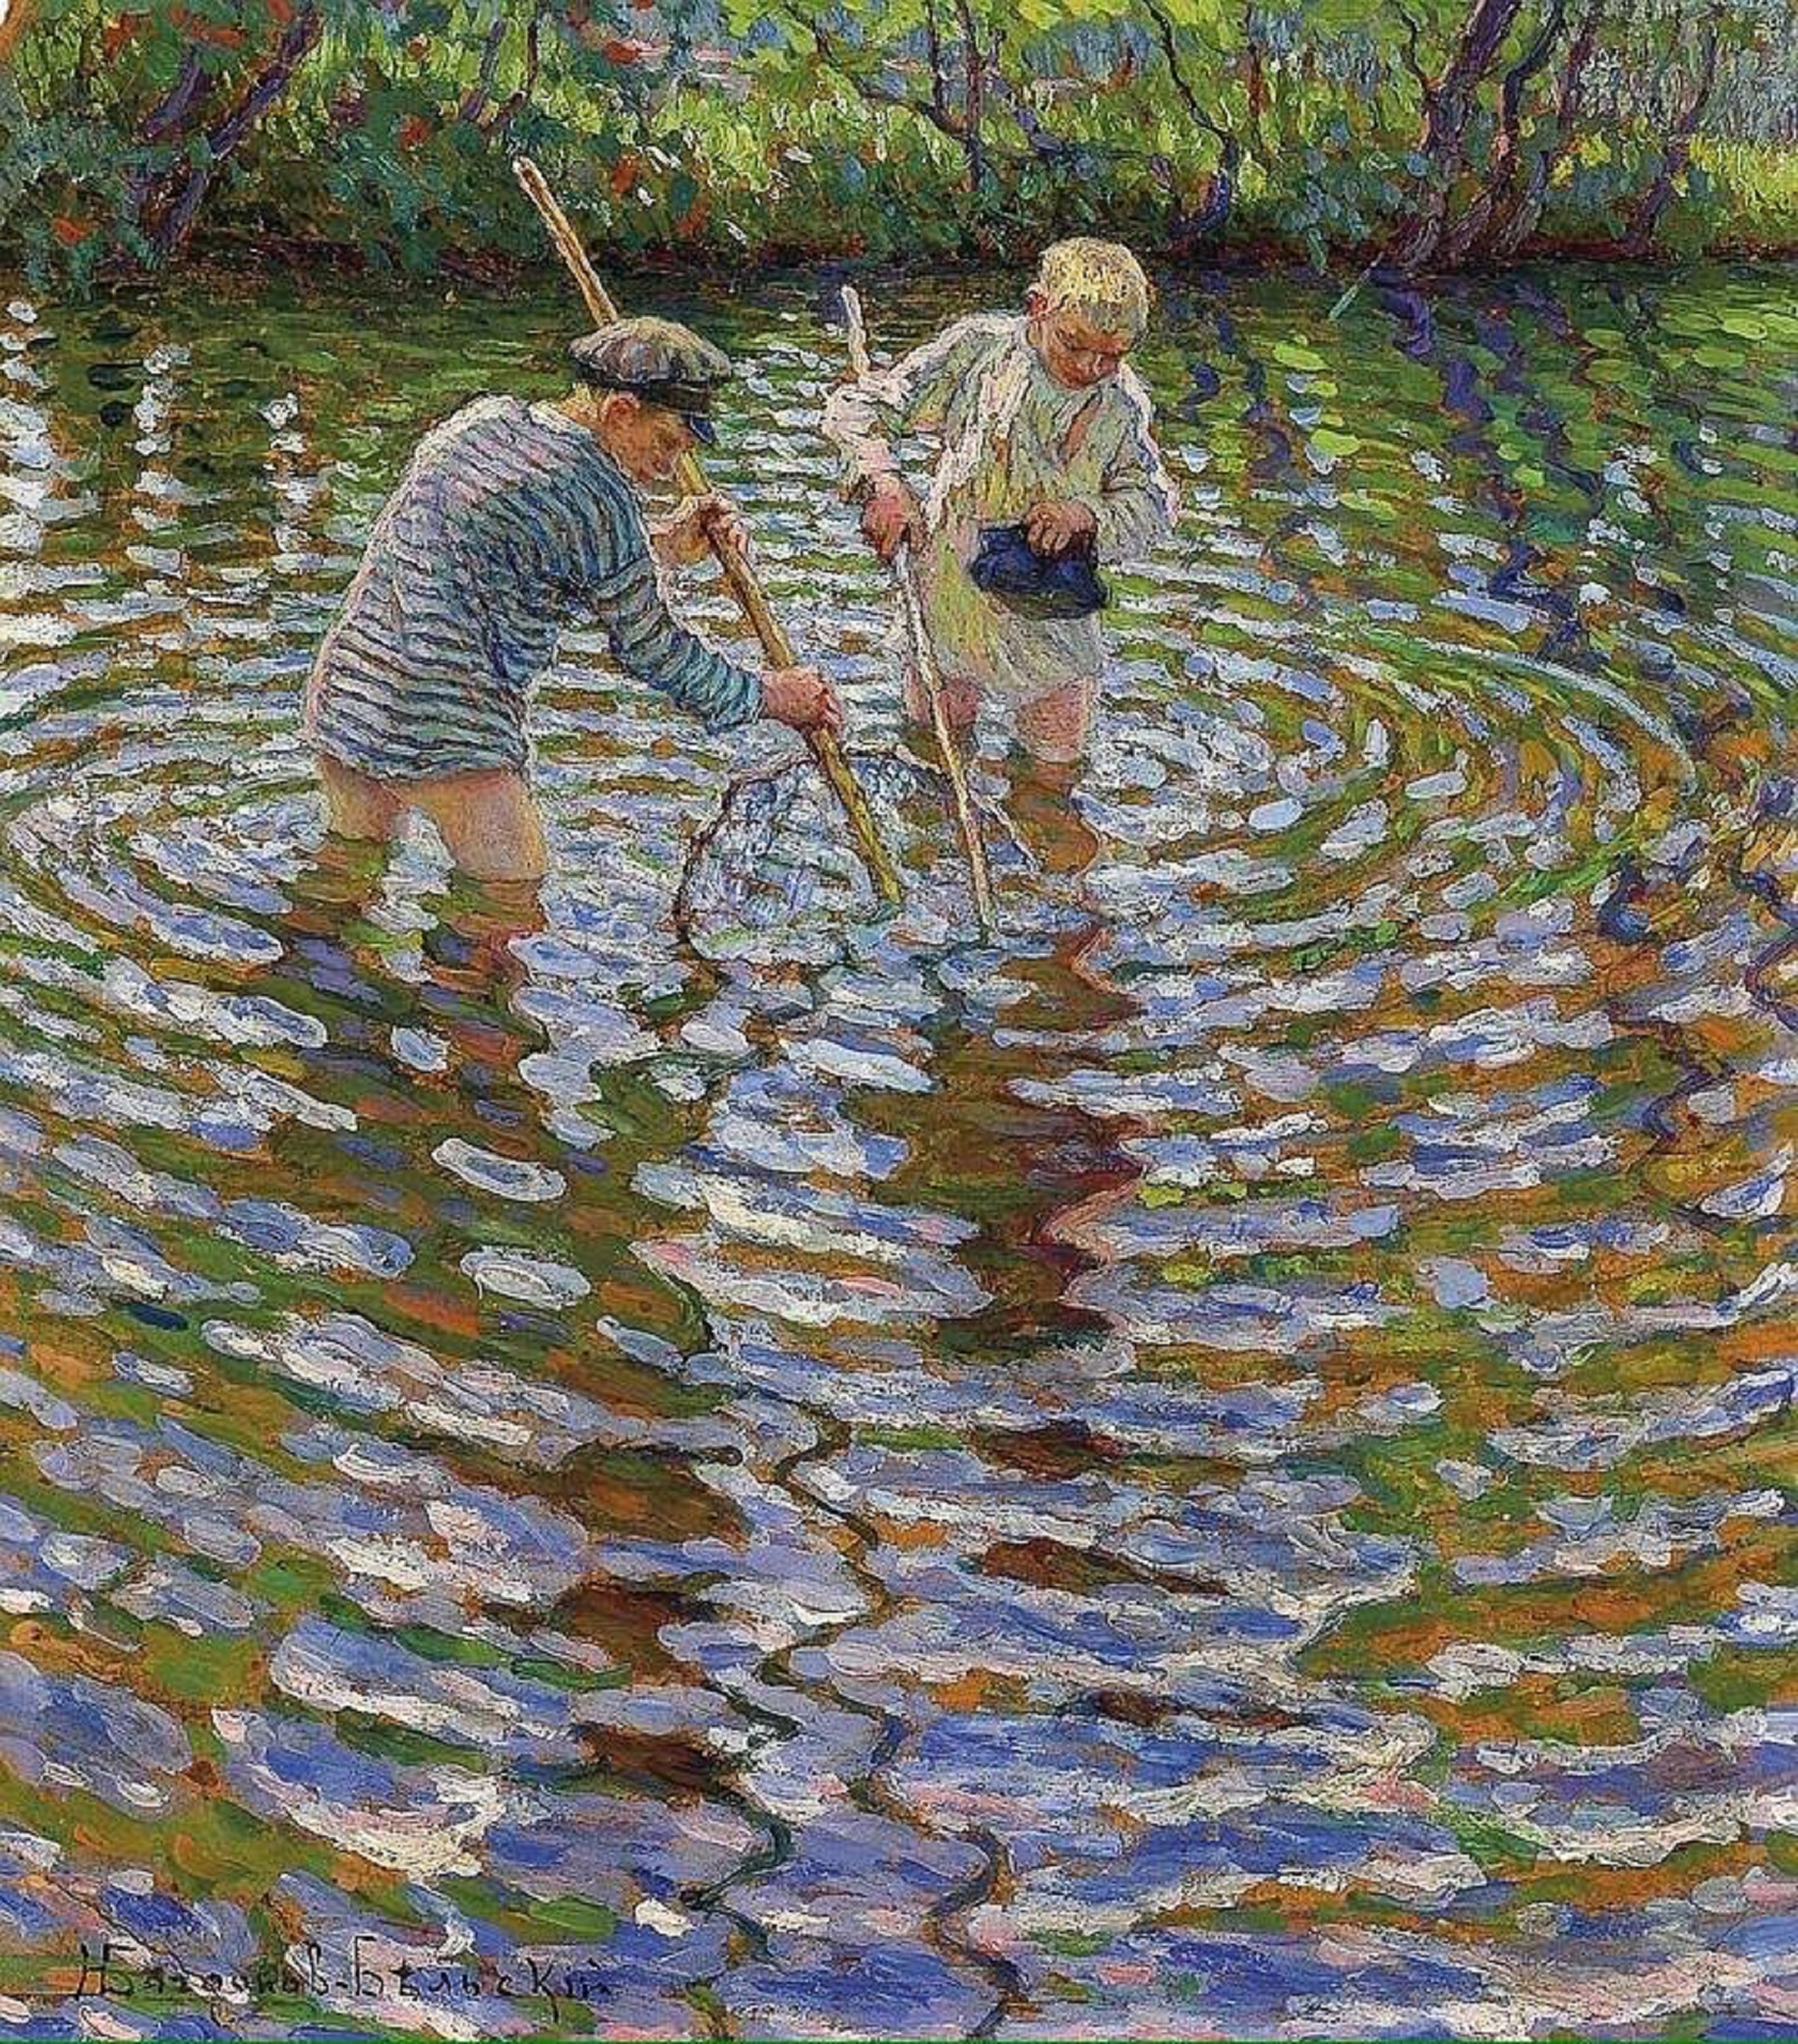 https://upload.wikimedia.org/wikipedia/commons/3/3e/Boys_fishing.jpg